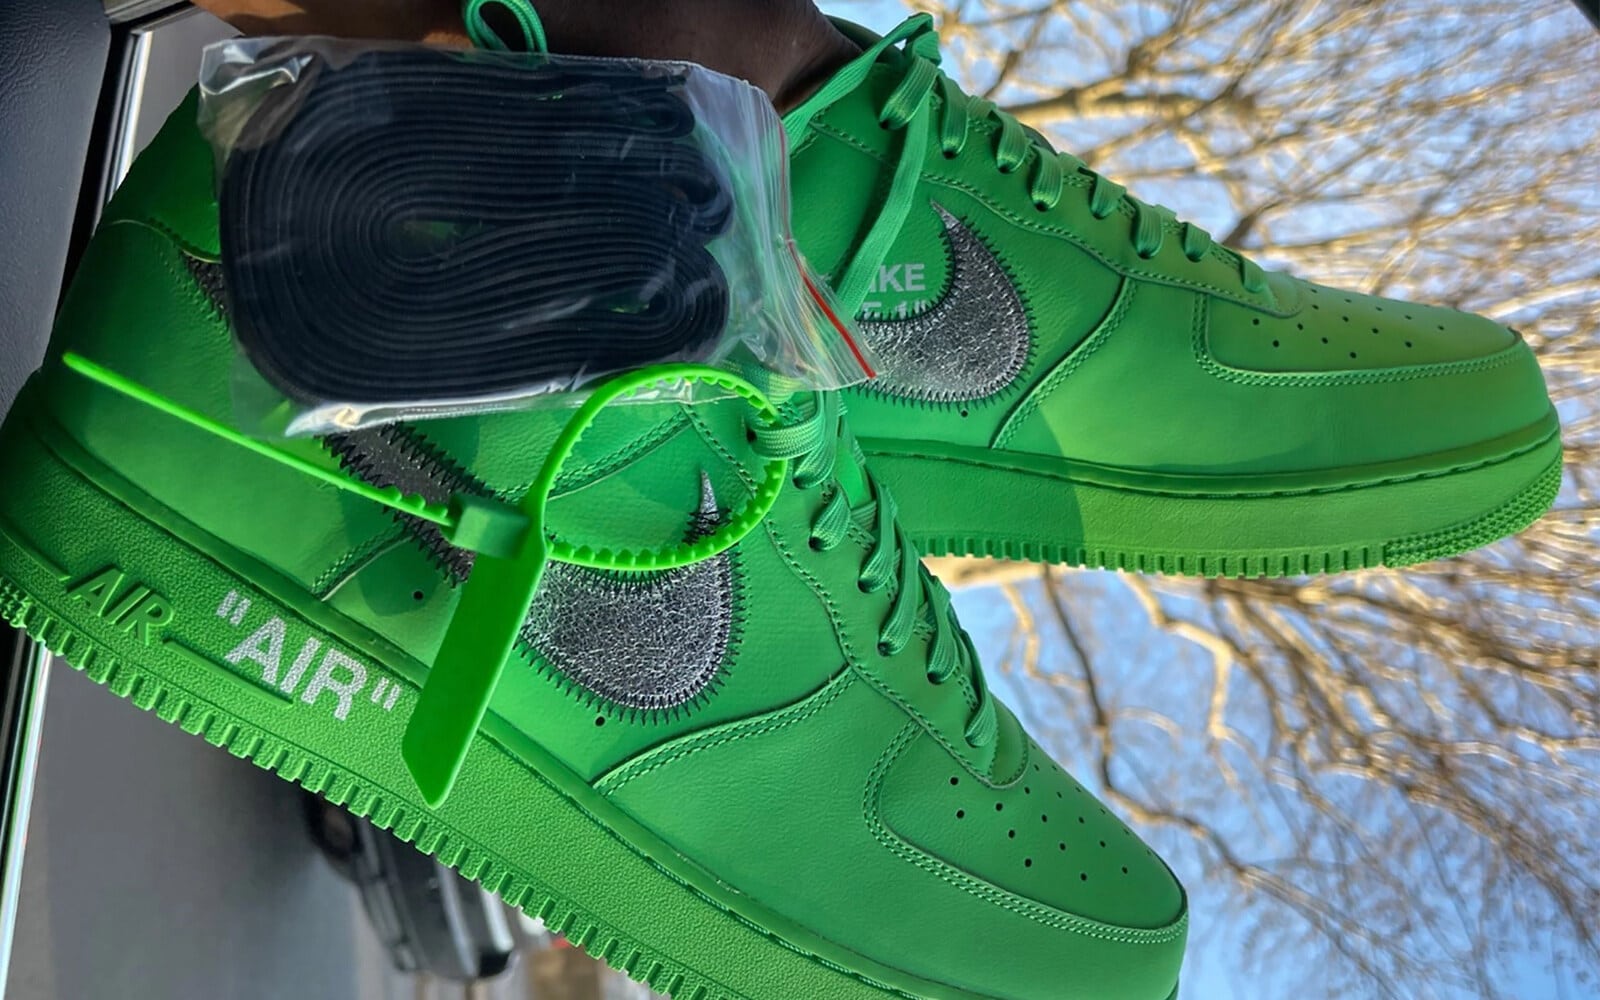 Un'inedita Off-White Nike Air Force 1 in colorazione verde comparsa sui social